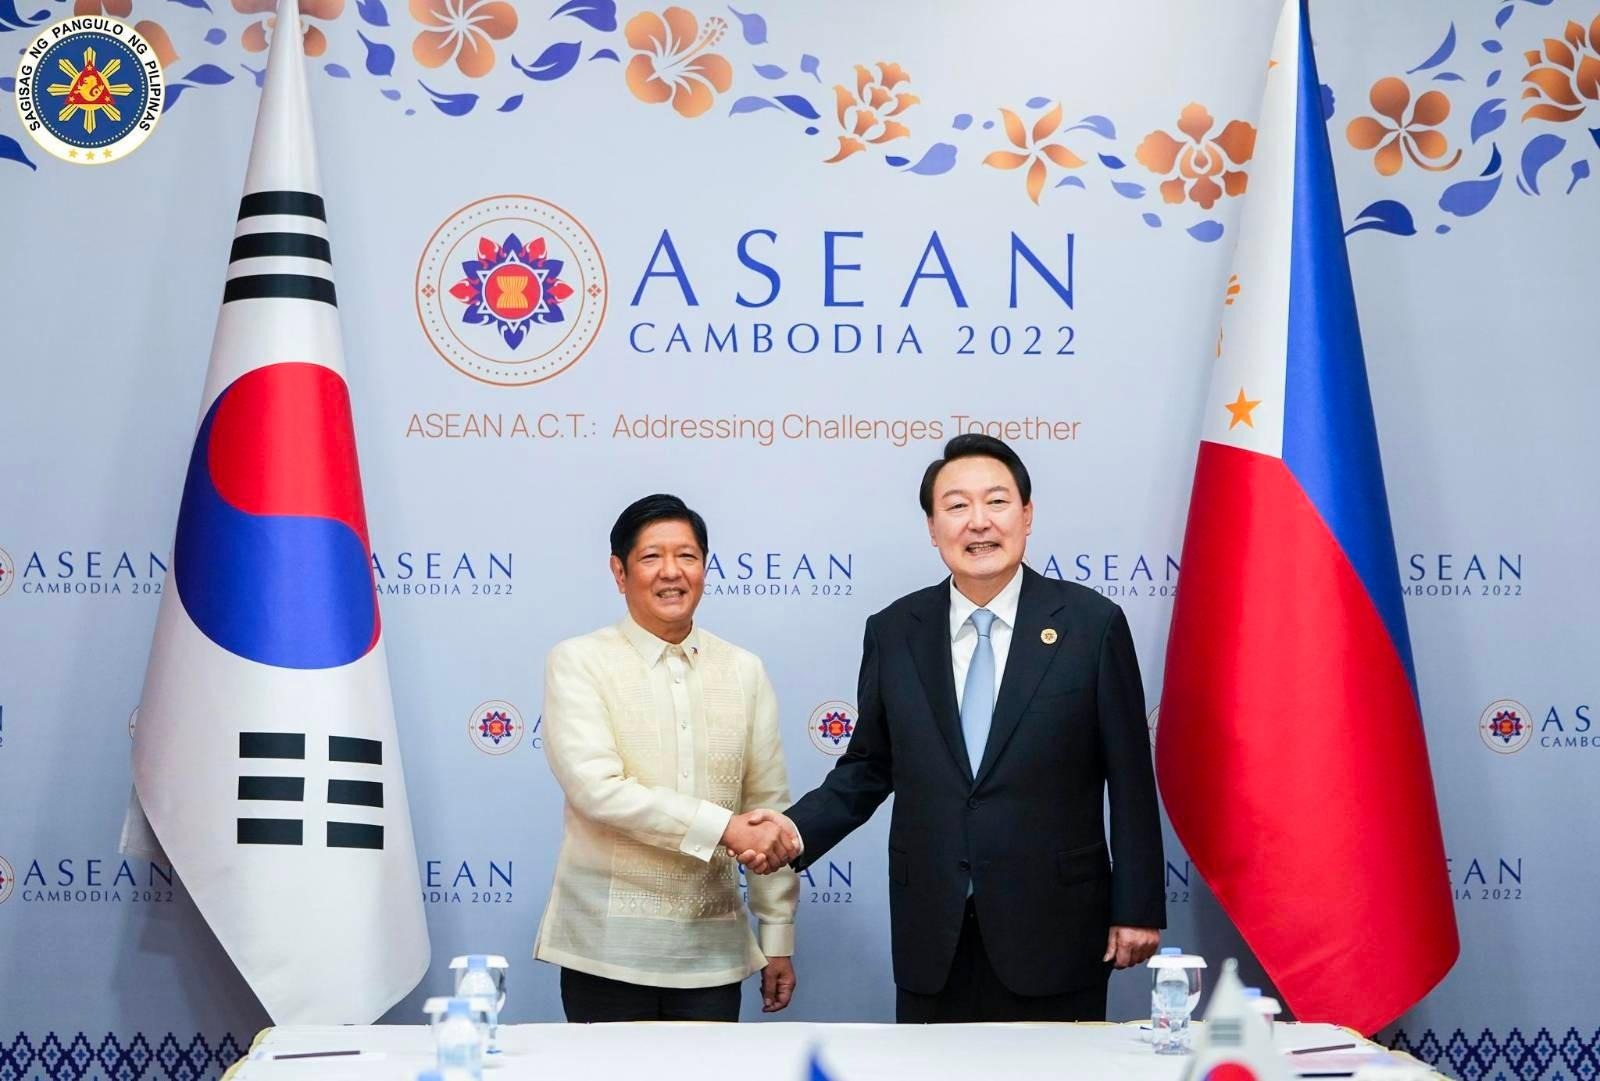 PBBM with South Korea President Yoo Suk-yeol shaking hands